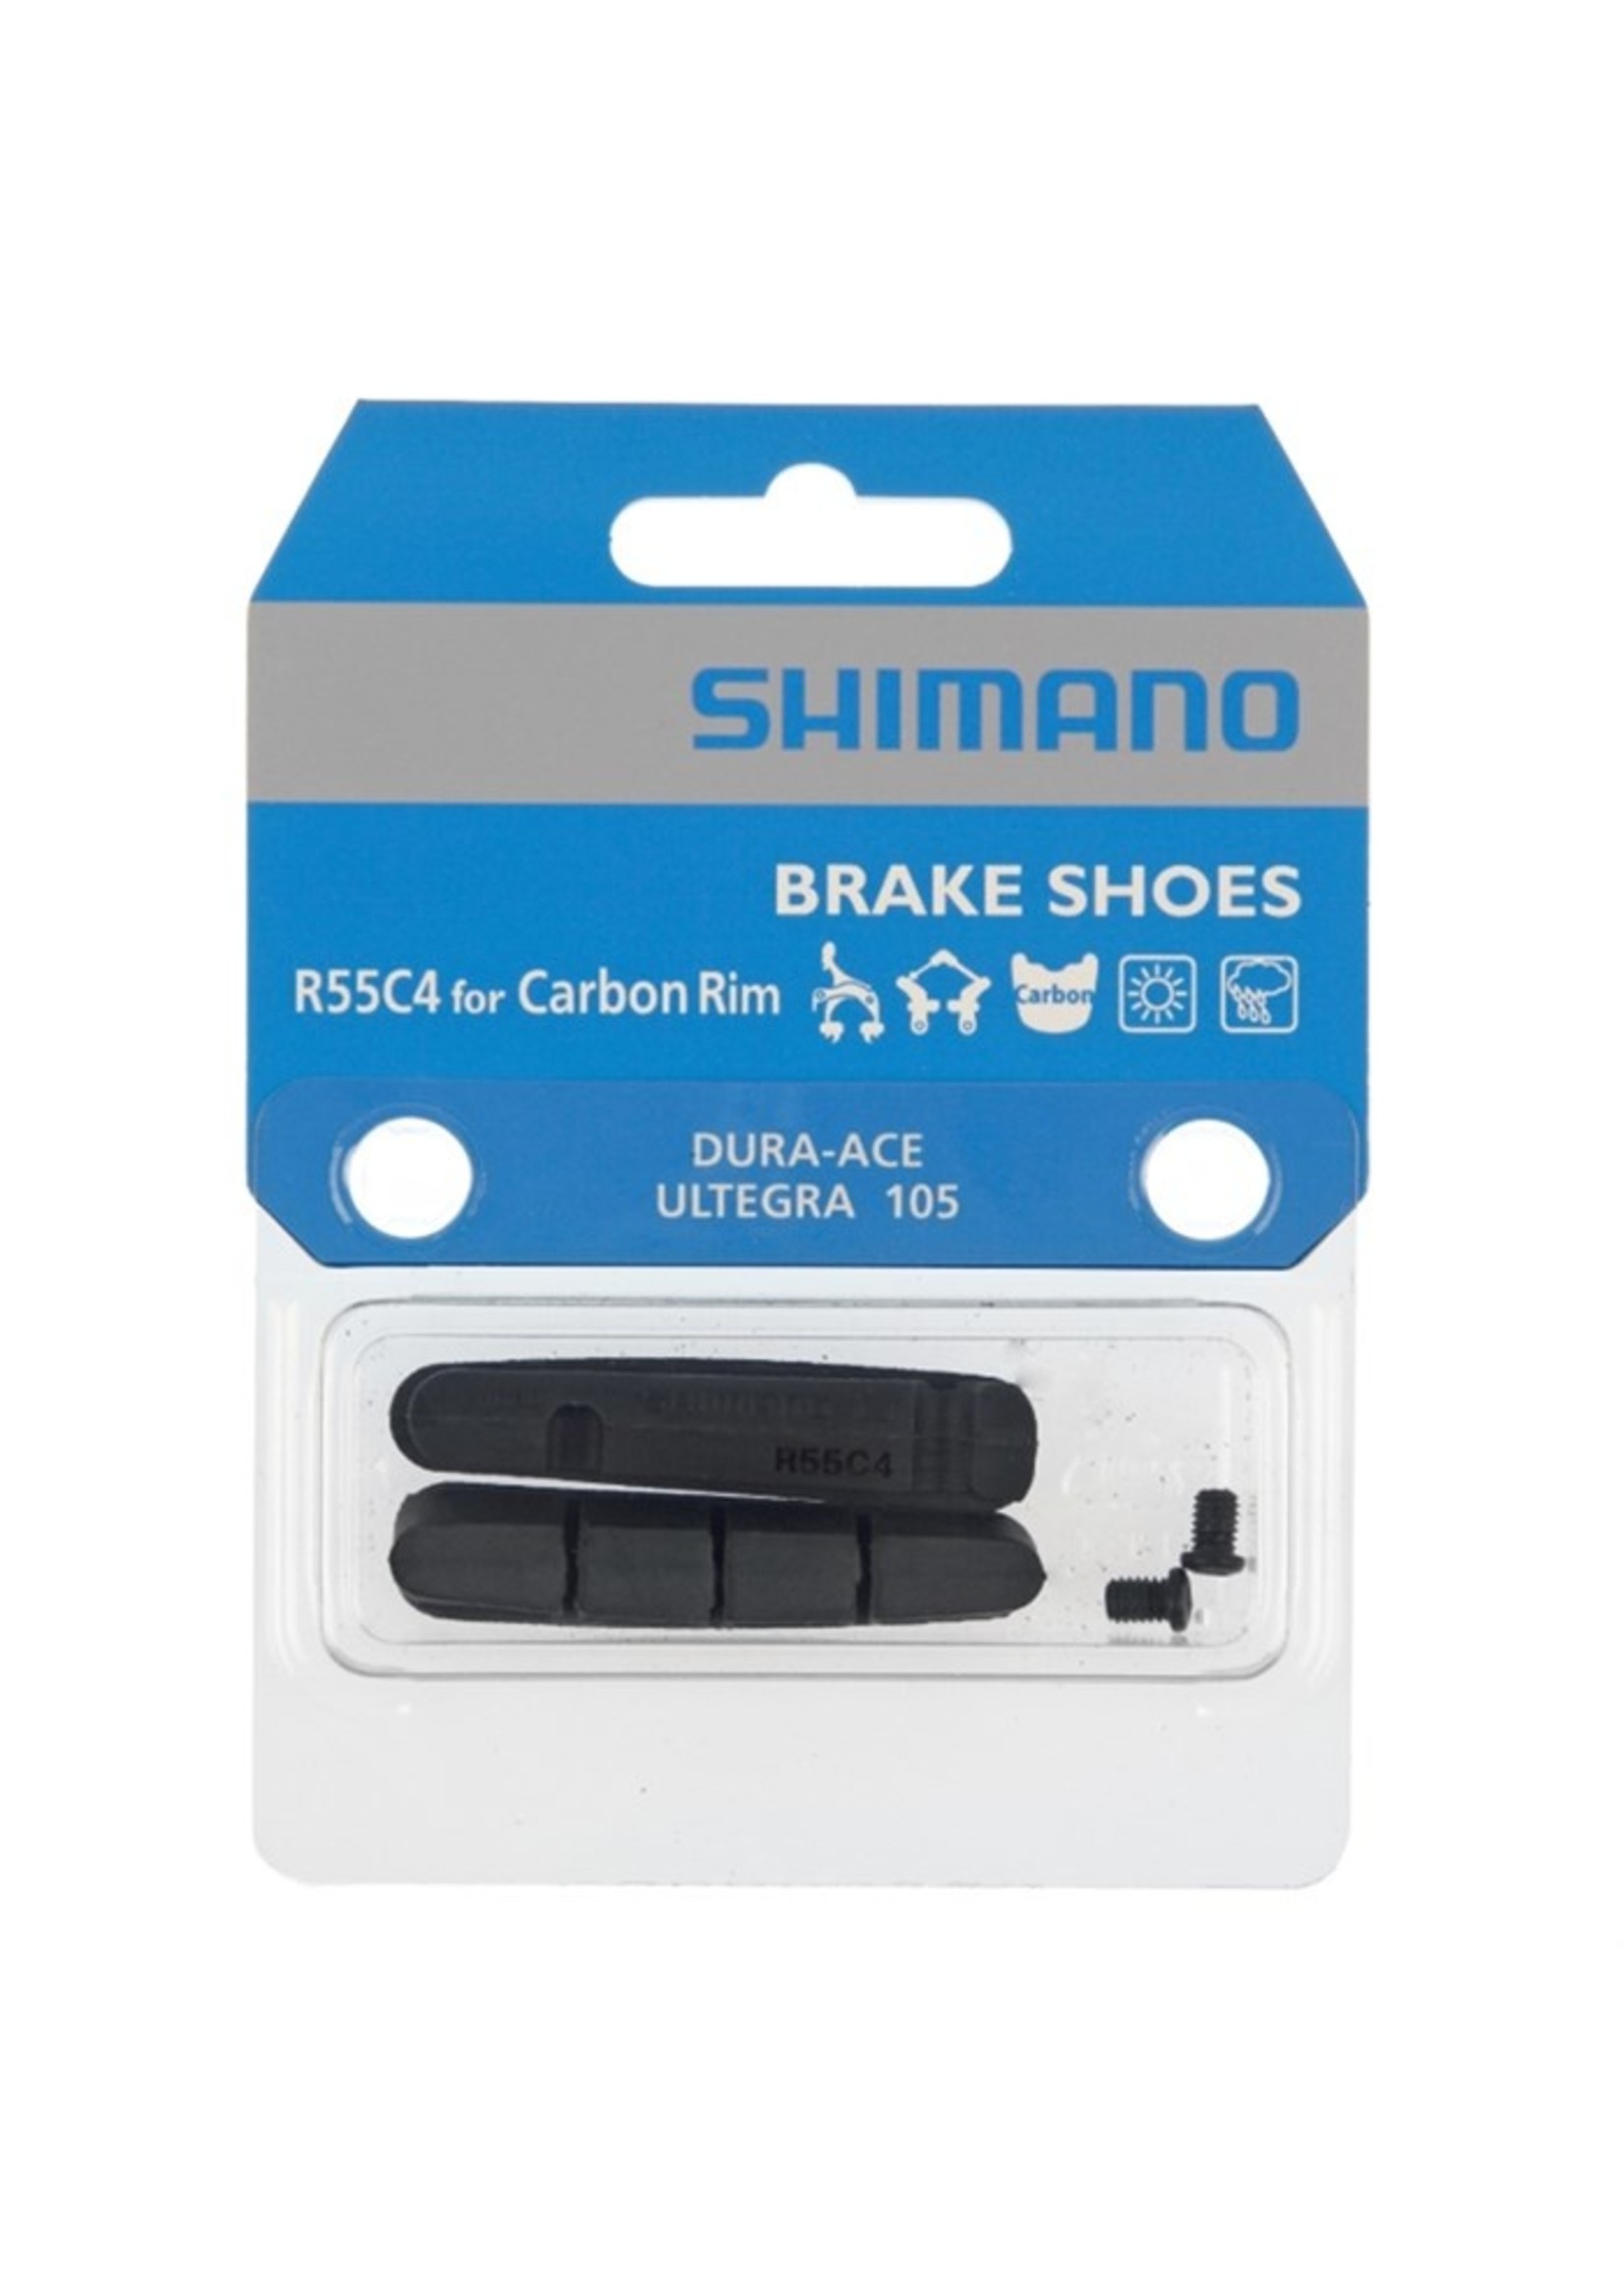 Shimano R55C4 BRAKE SHOES CARBON RIM 2 PACK